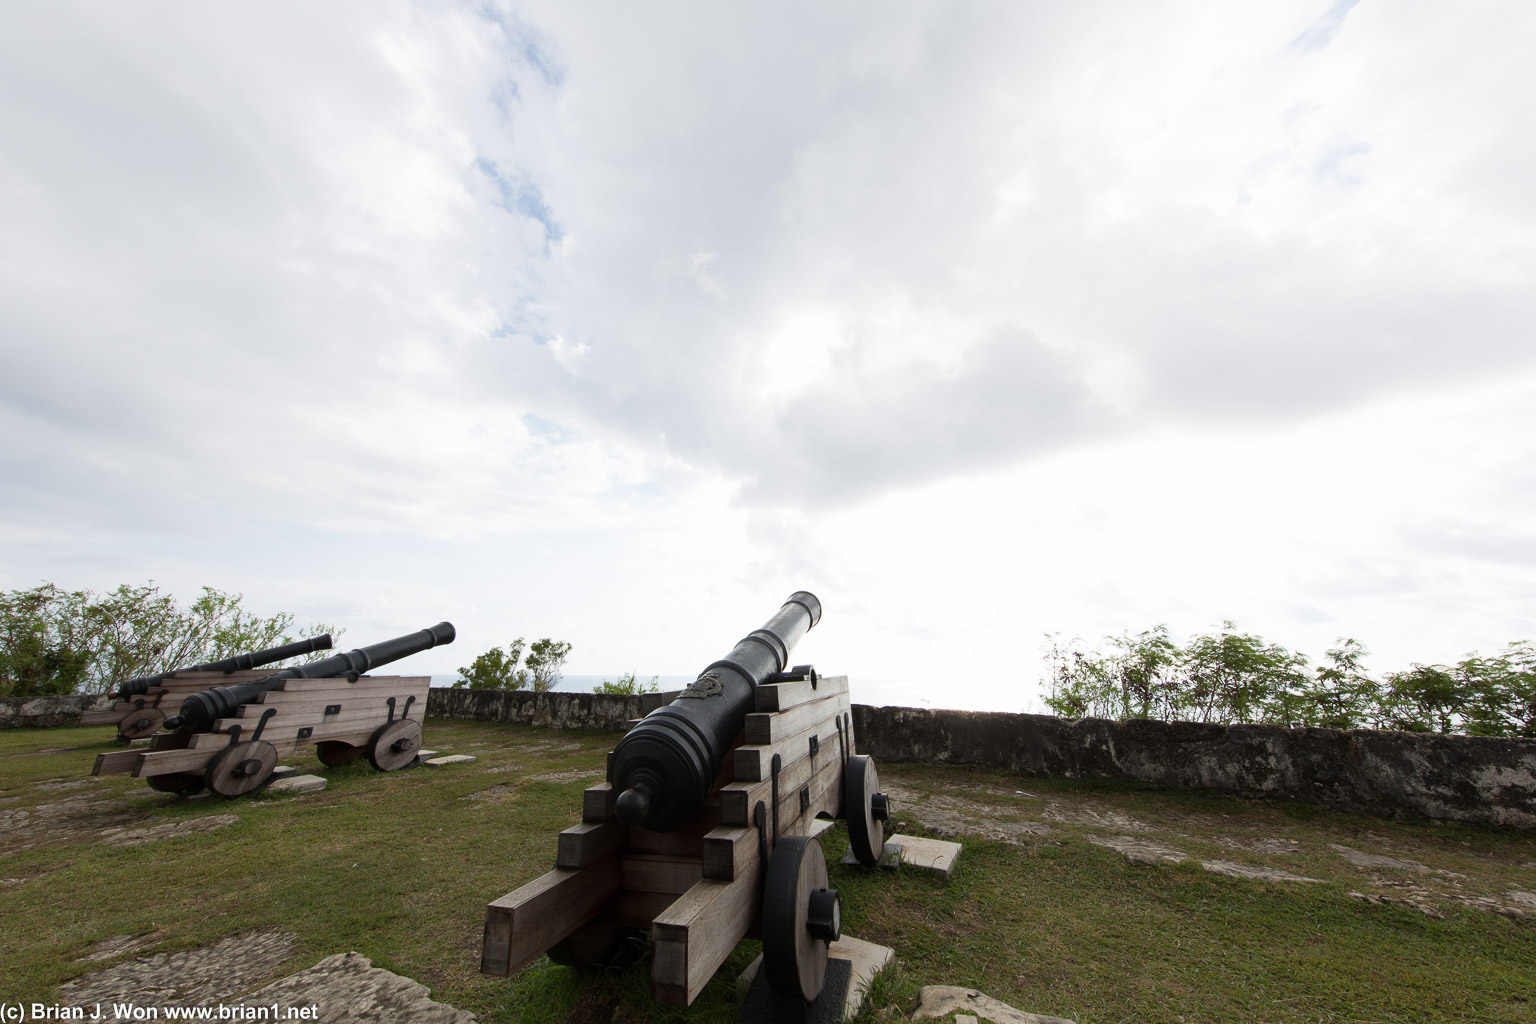 Spanish cannon at Fort Soledad.